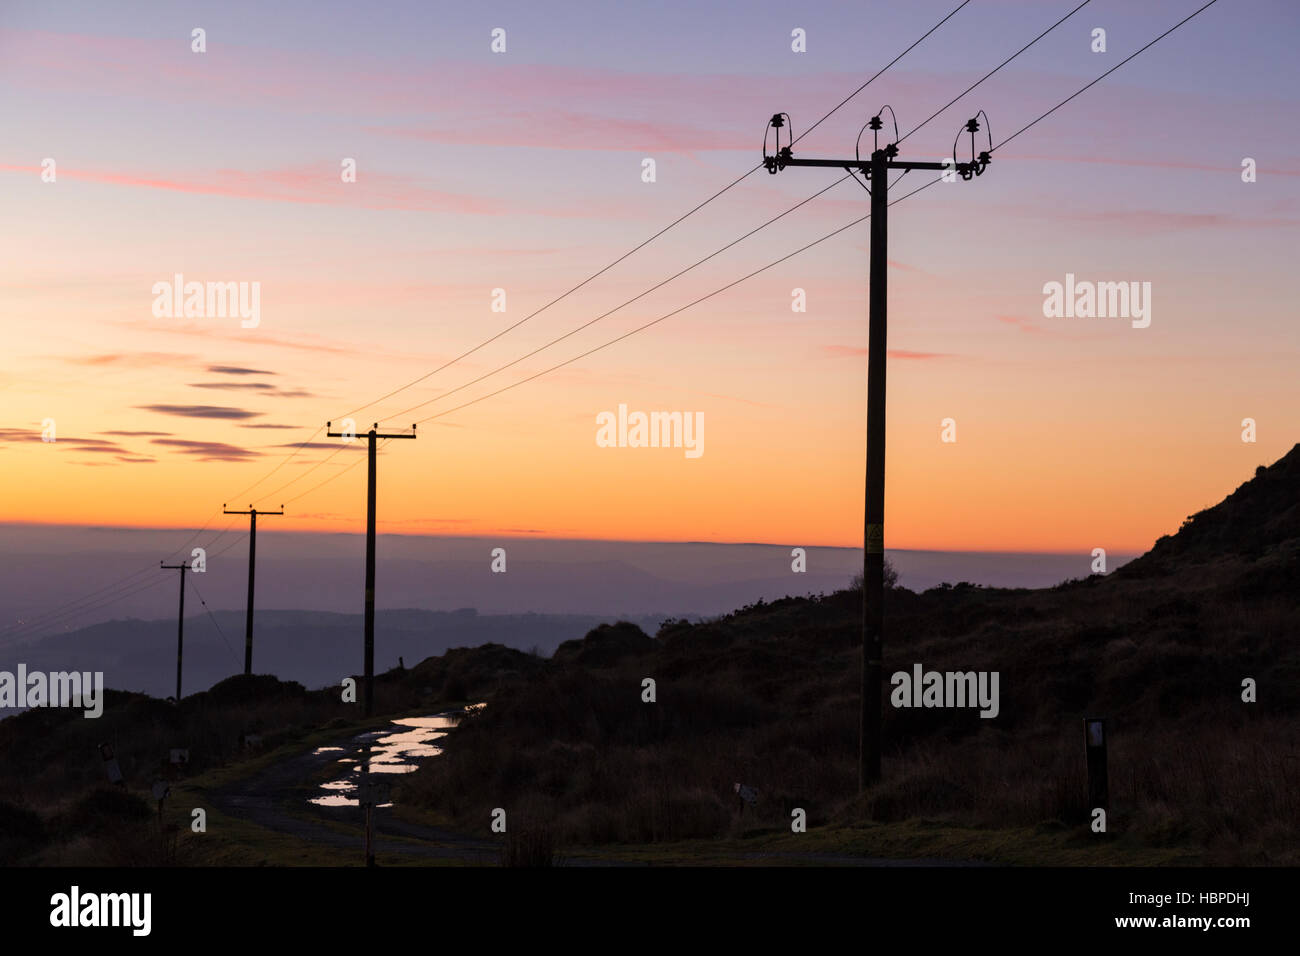 Sonnenuntergang über Elektrizität Masten, England, UK Stockfoto